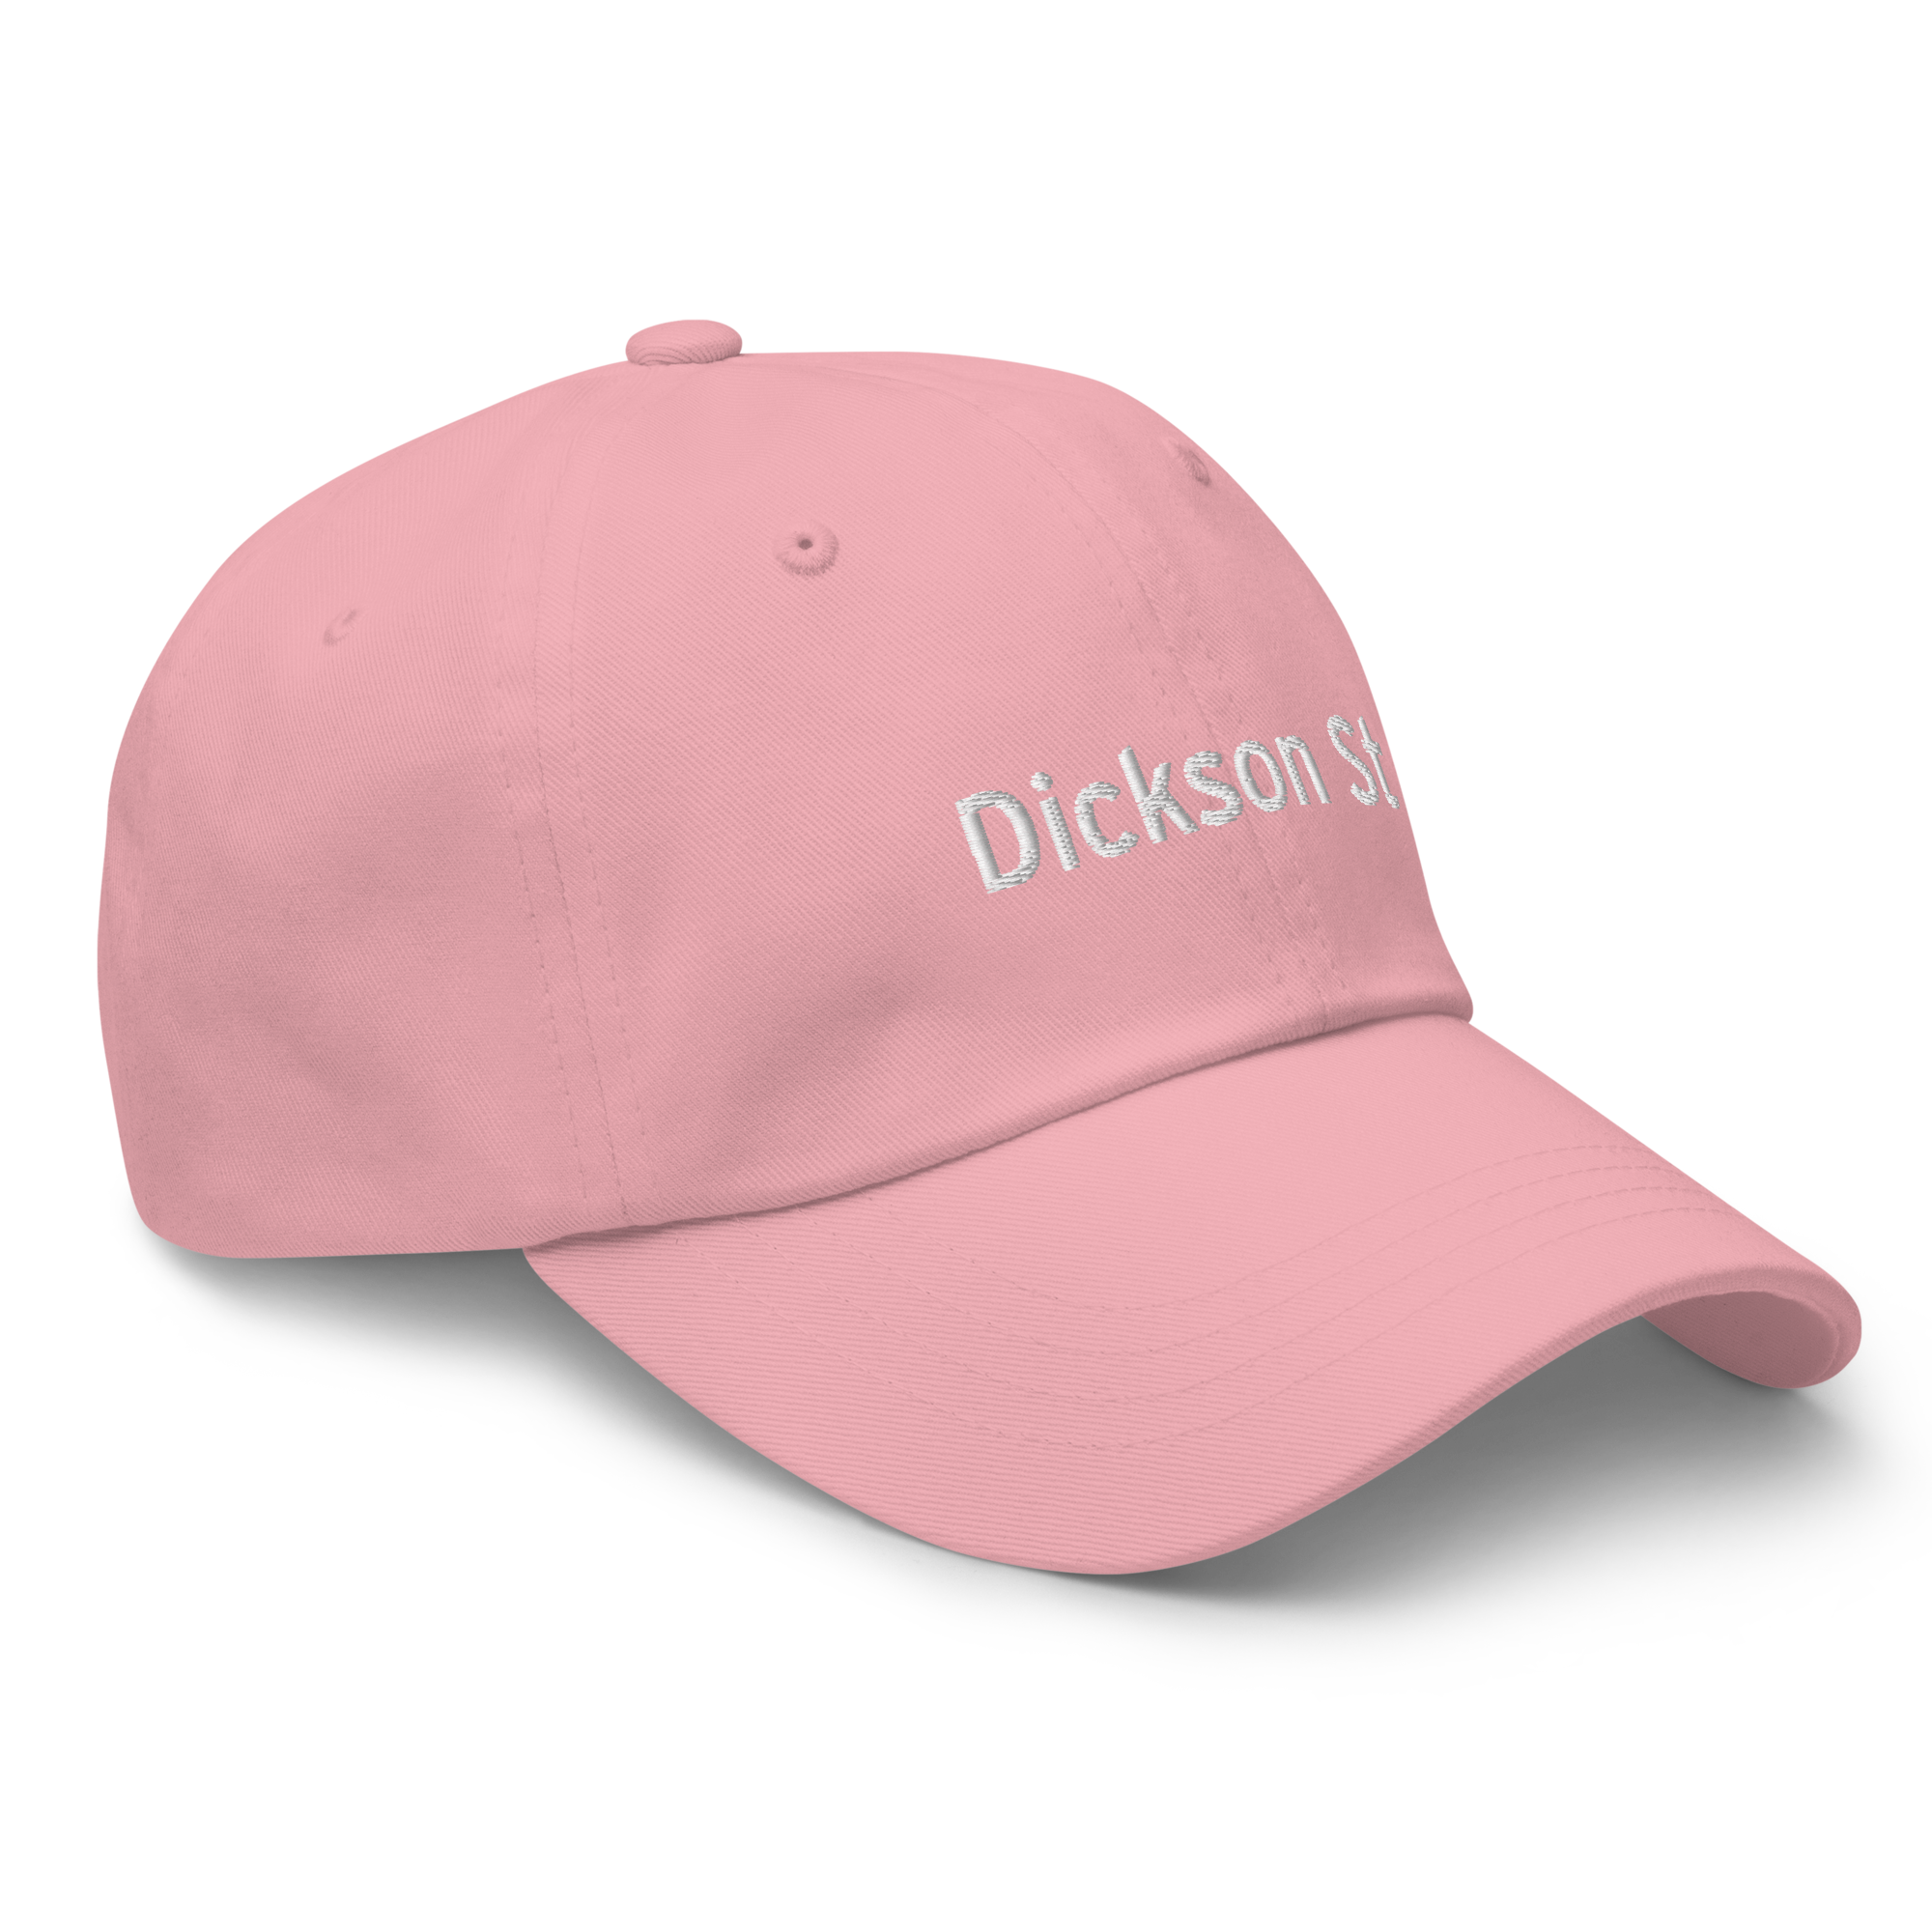 Dickson St Dad hat